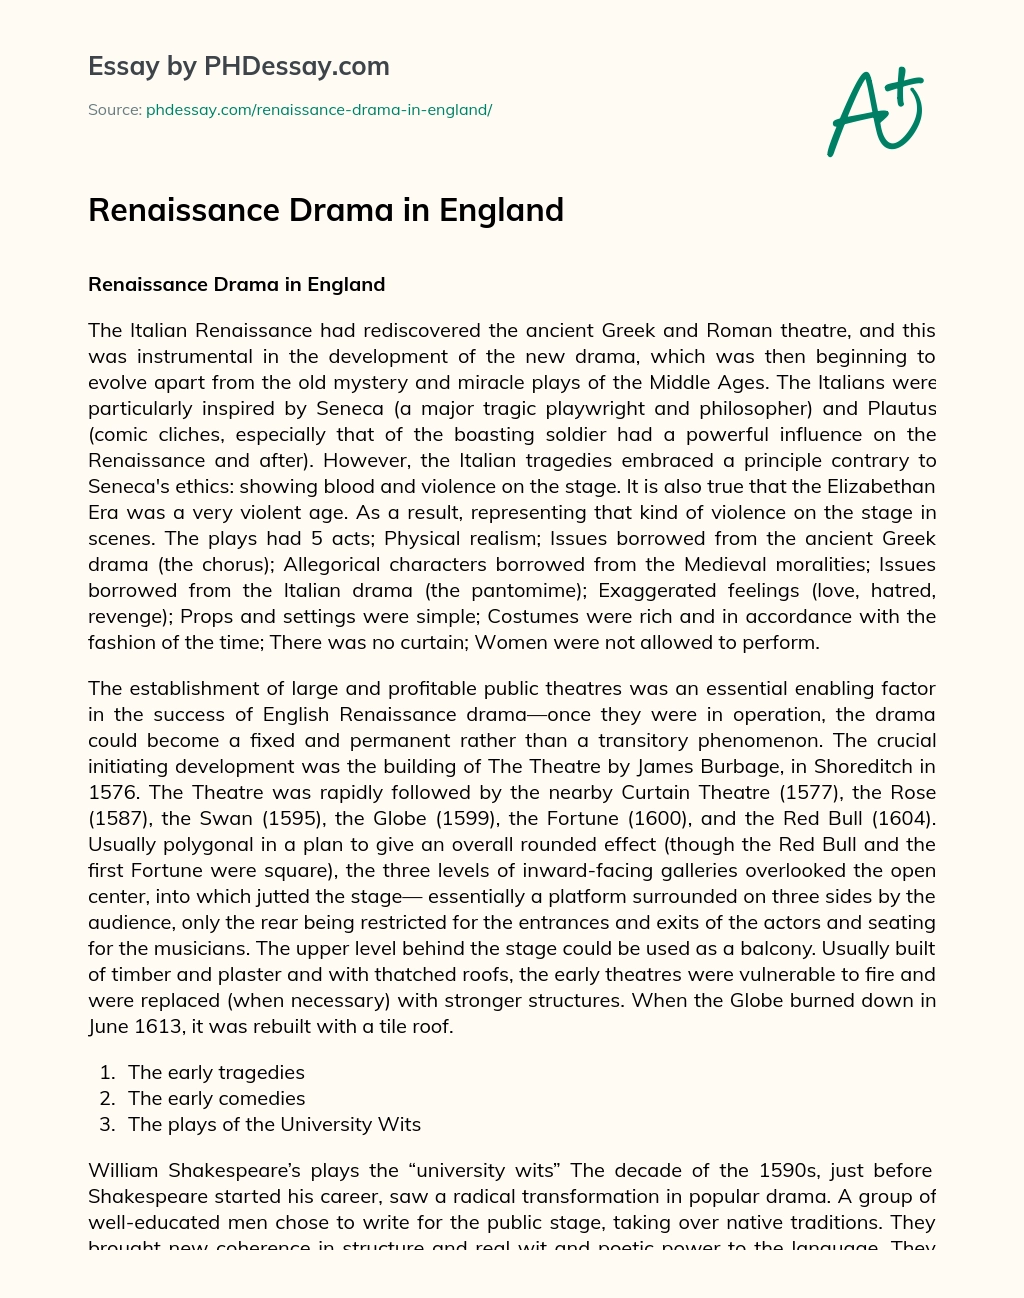 Renaissance Drama in England essay